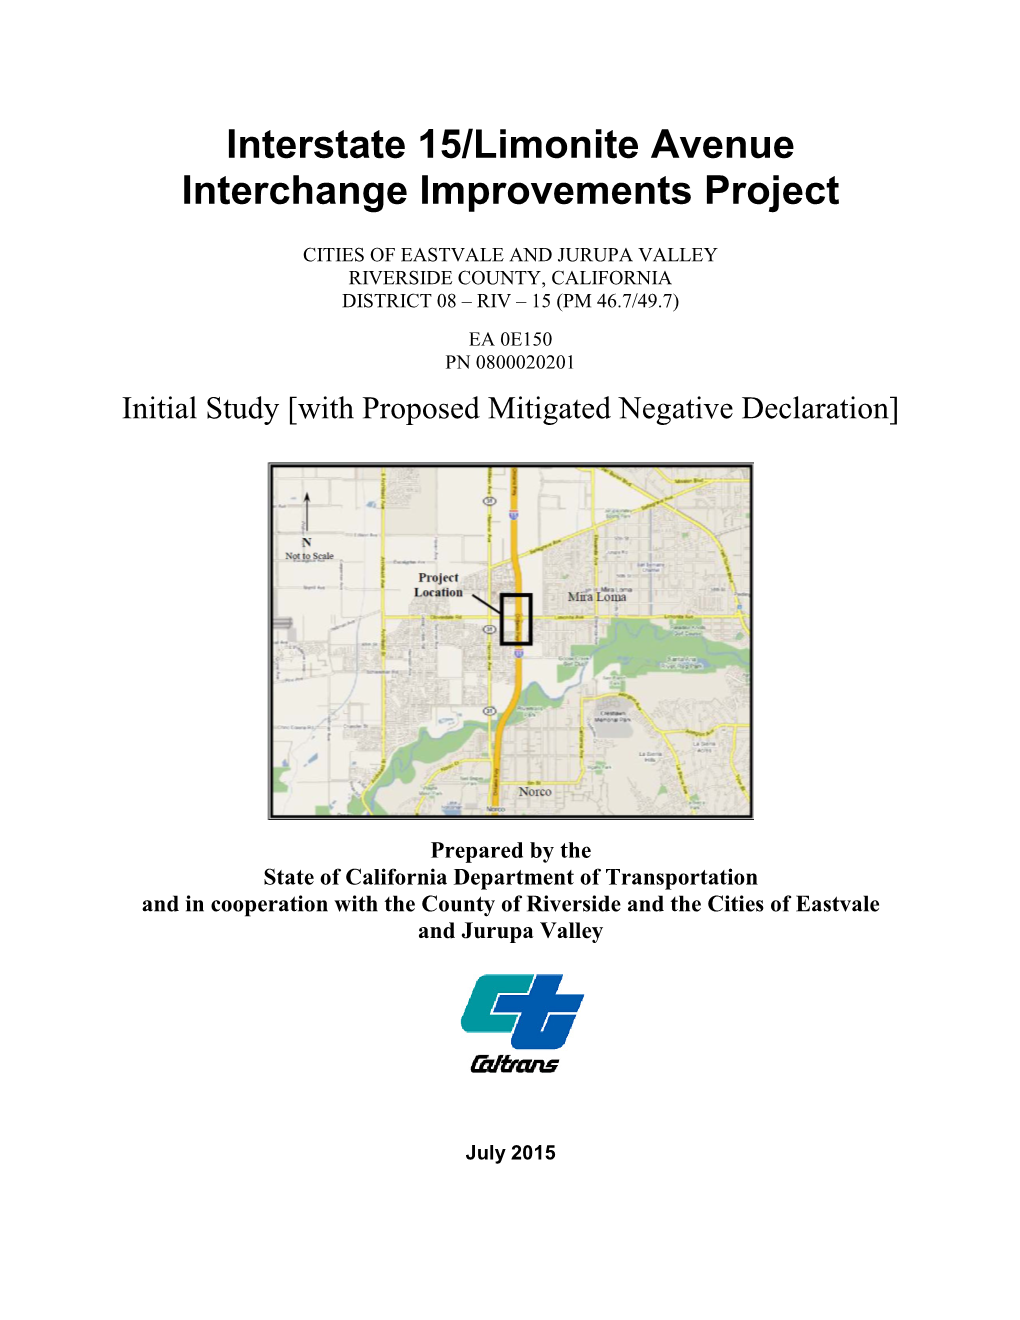 Interstate 15/Limonite Avenue Interchange Improvements Project